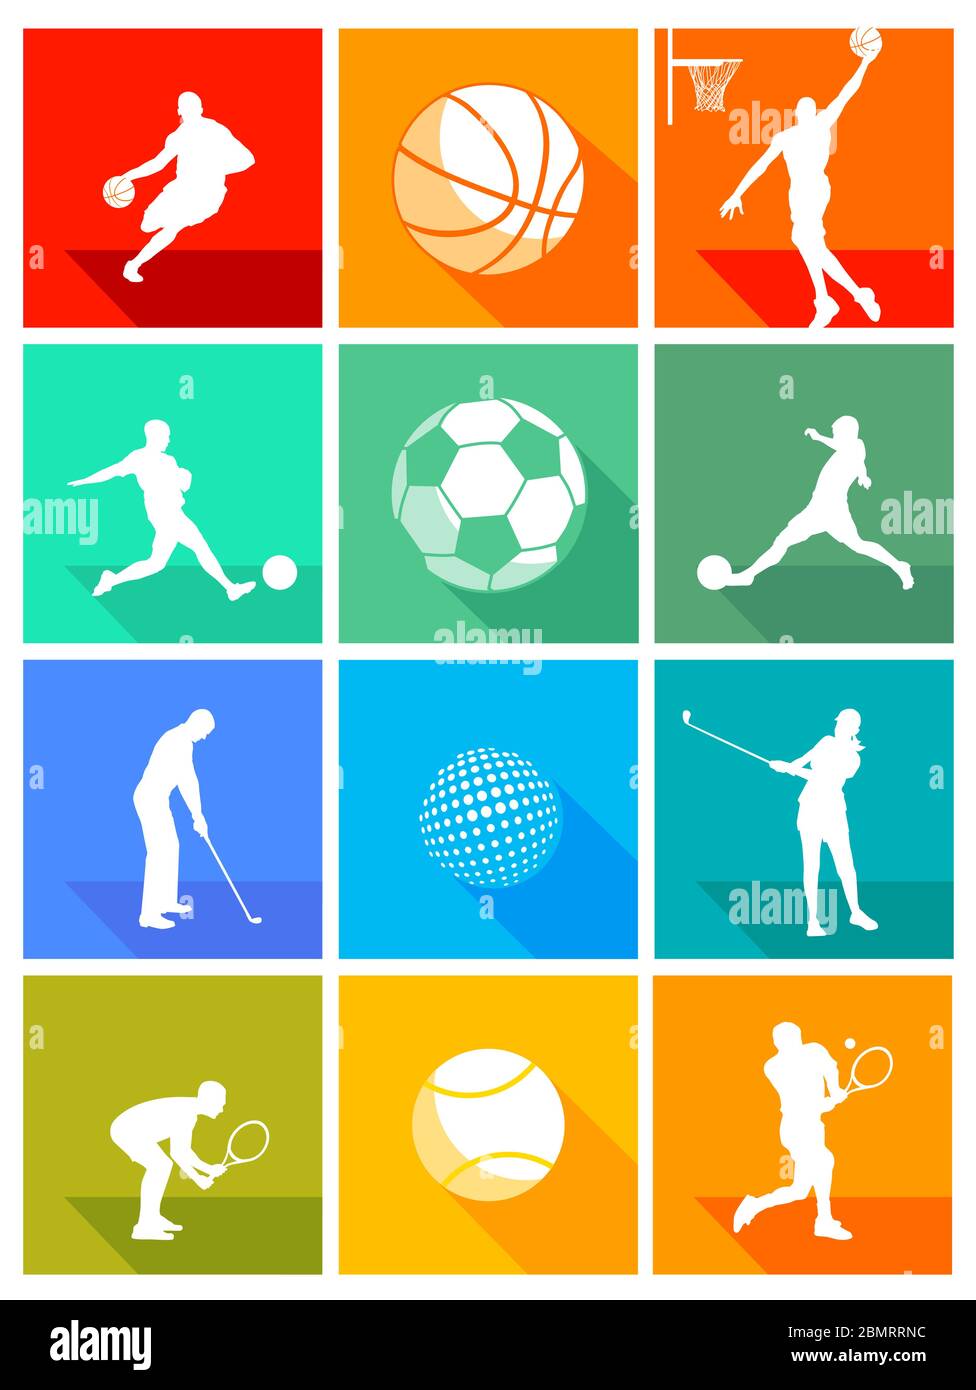 Sports, ensemble d'athlètes de diverses disciplines sportives. Football, tennis, basket-ball, golf - illustration vectorielle Illustration de Vecteur